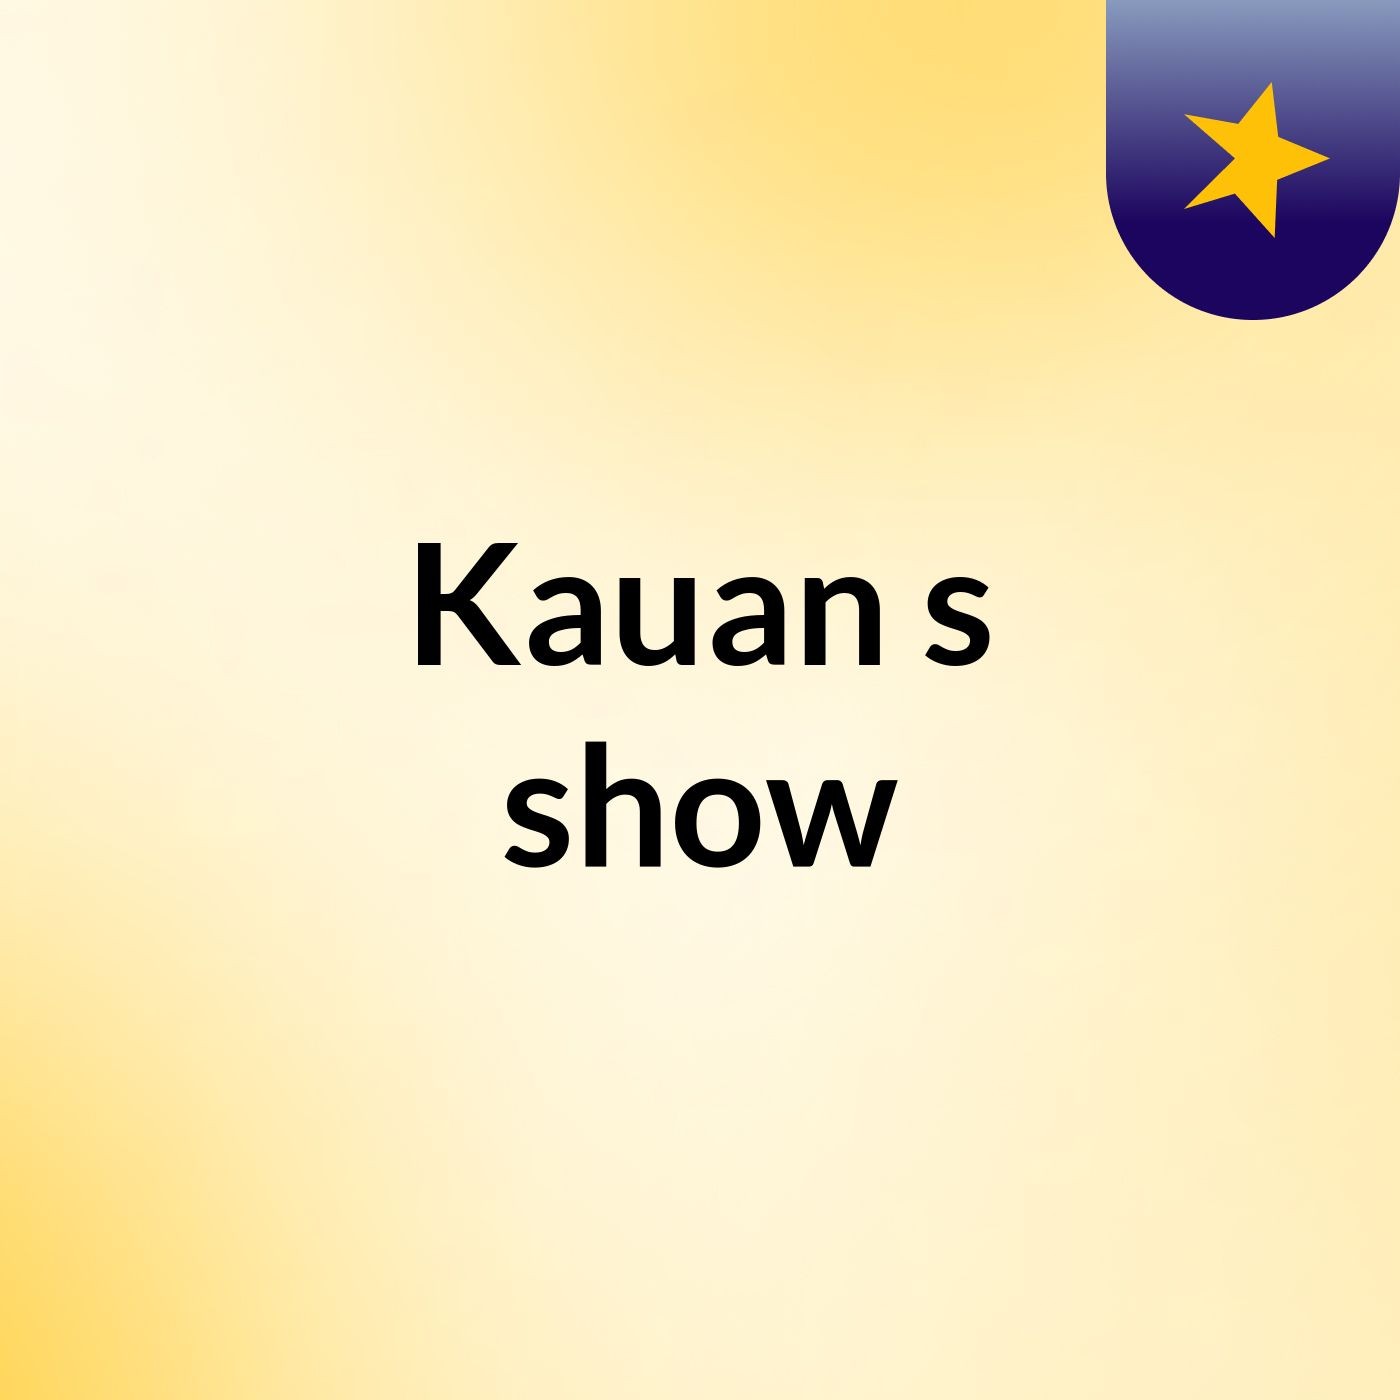 Kauan's show